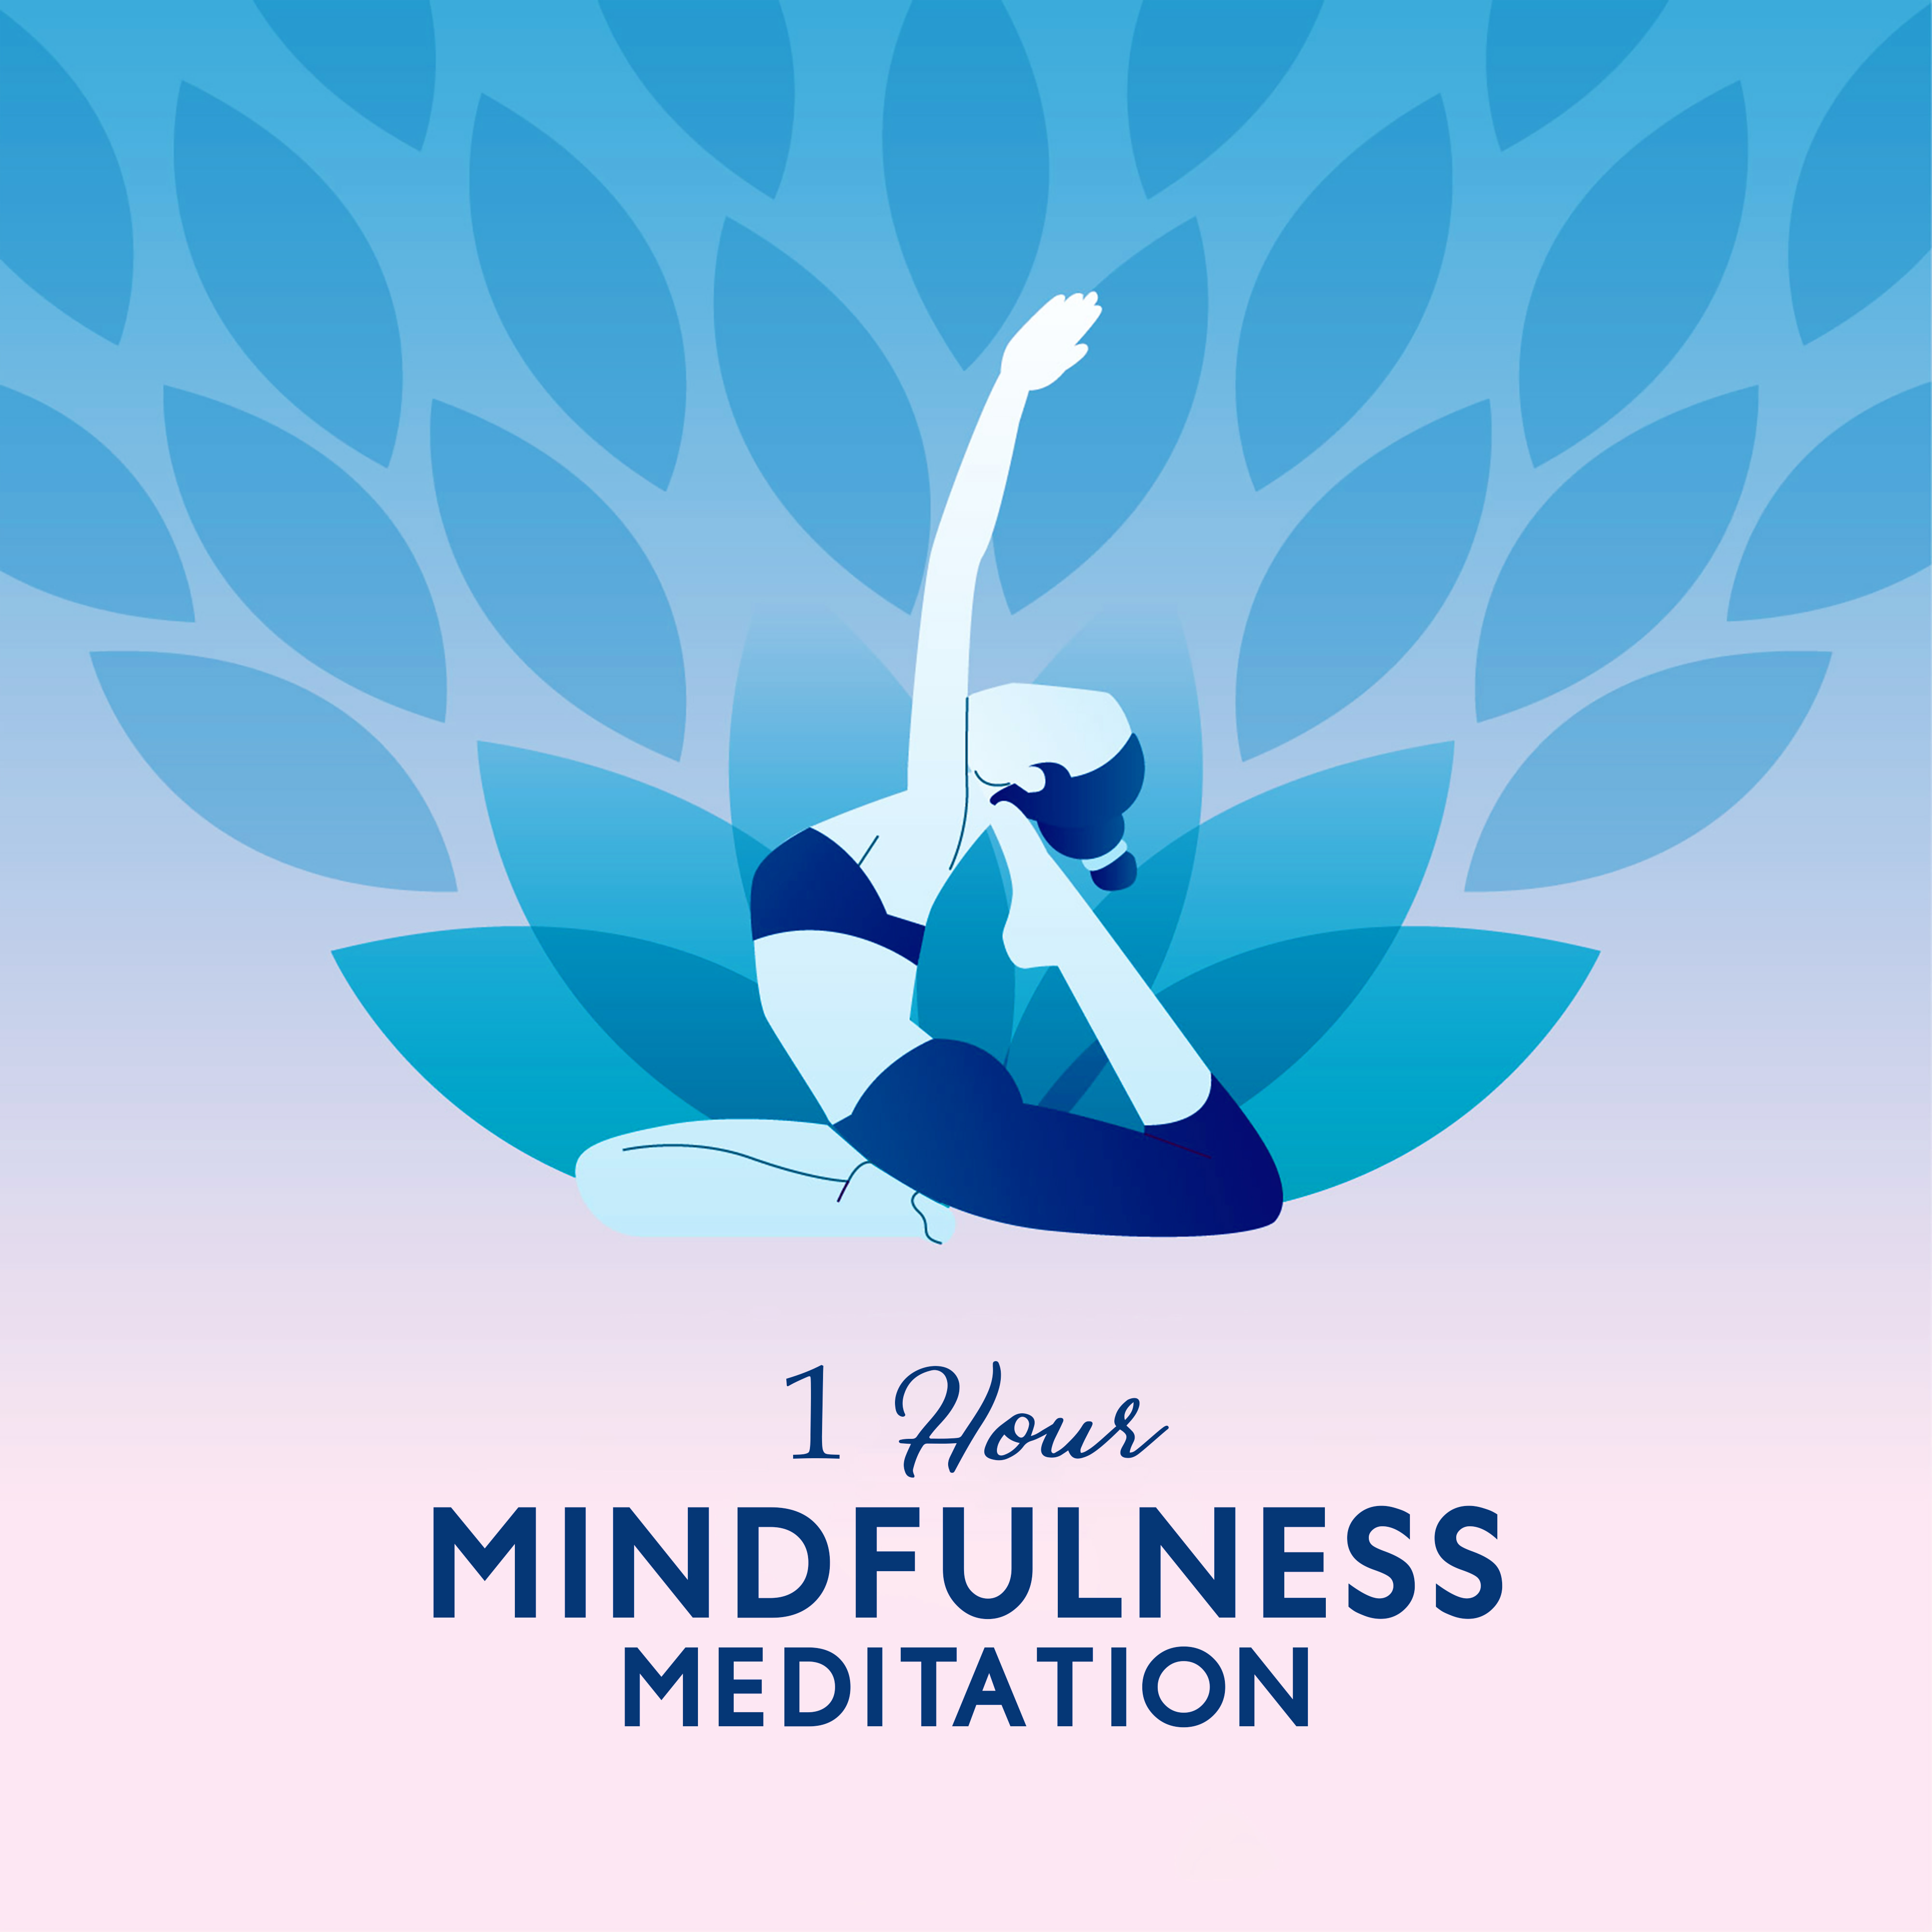 1 Hour Mindfulness Meditation